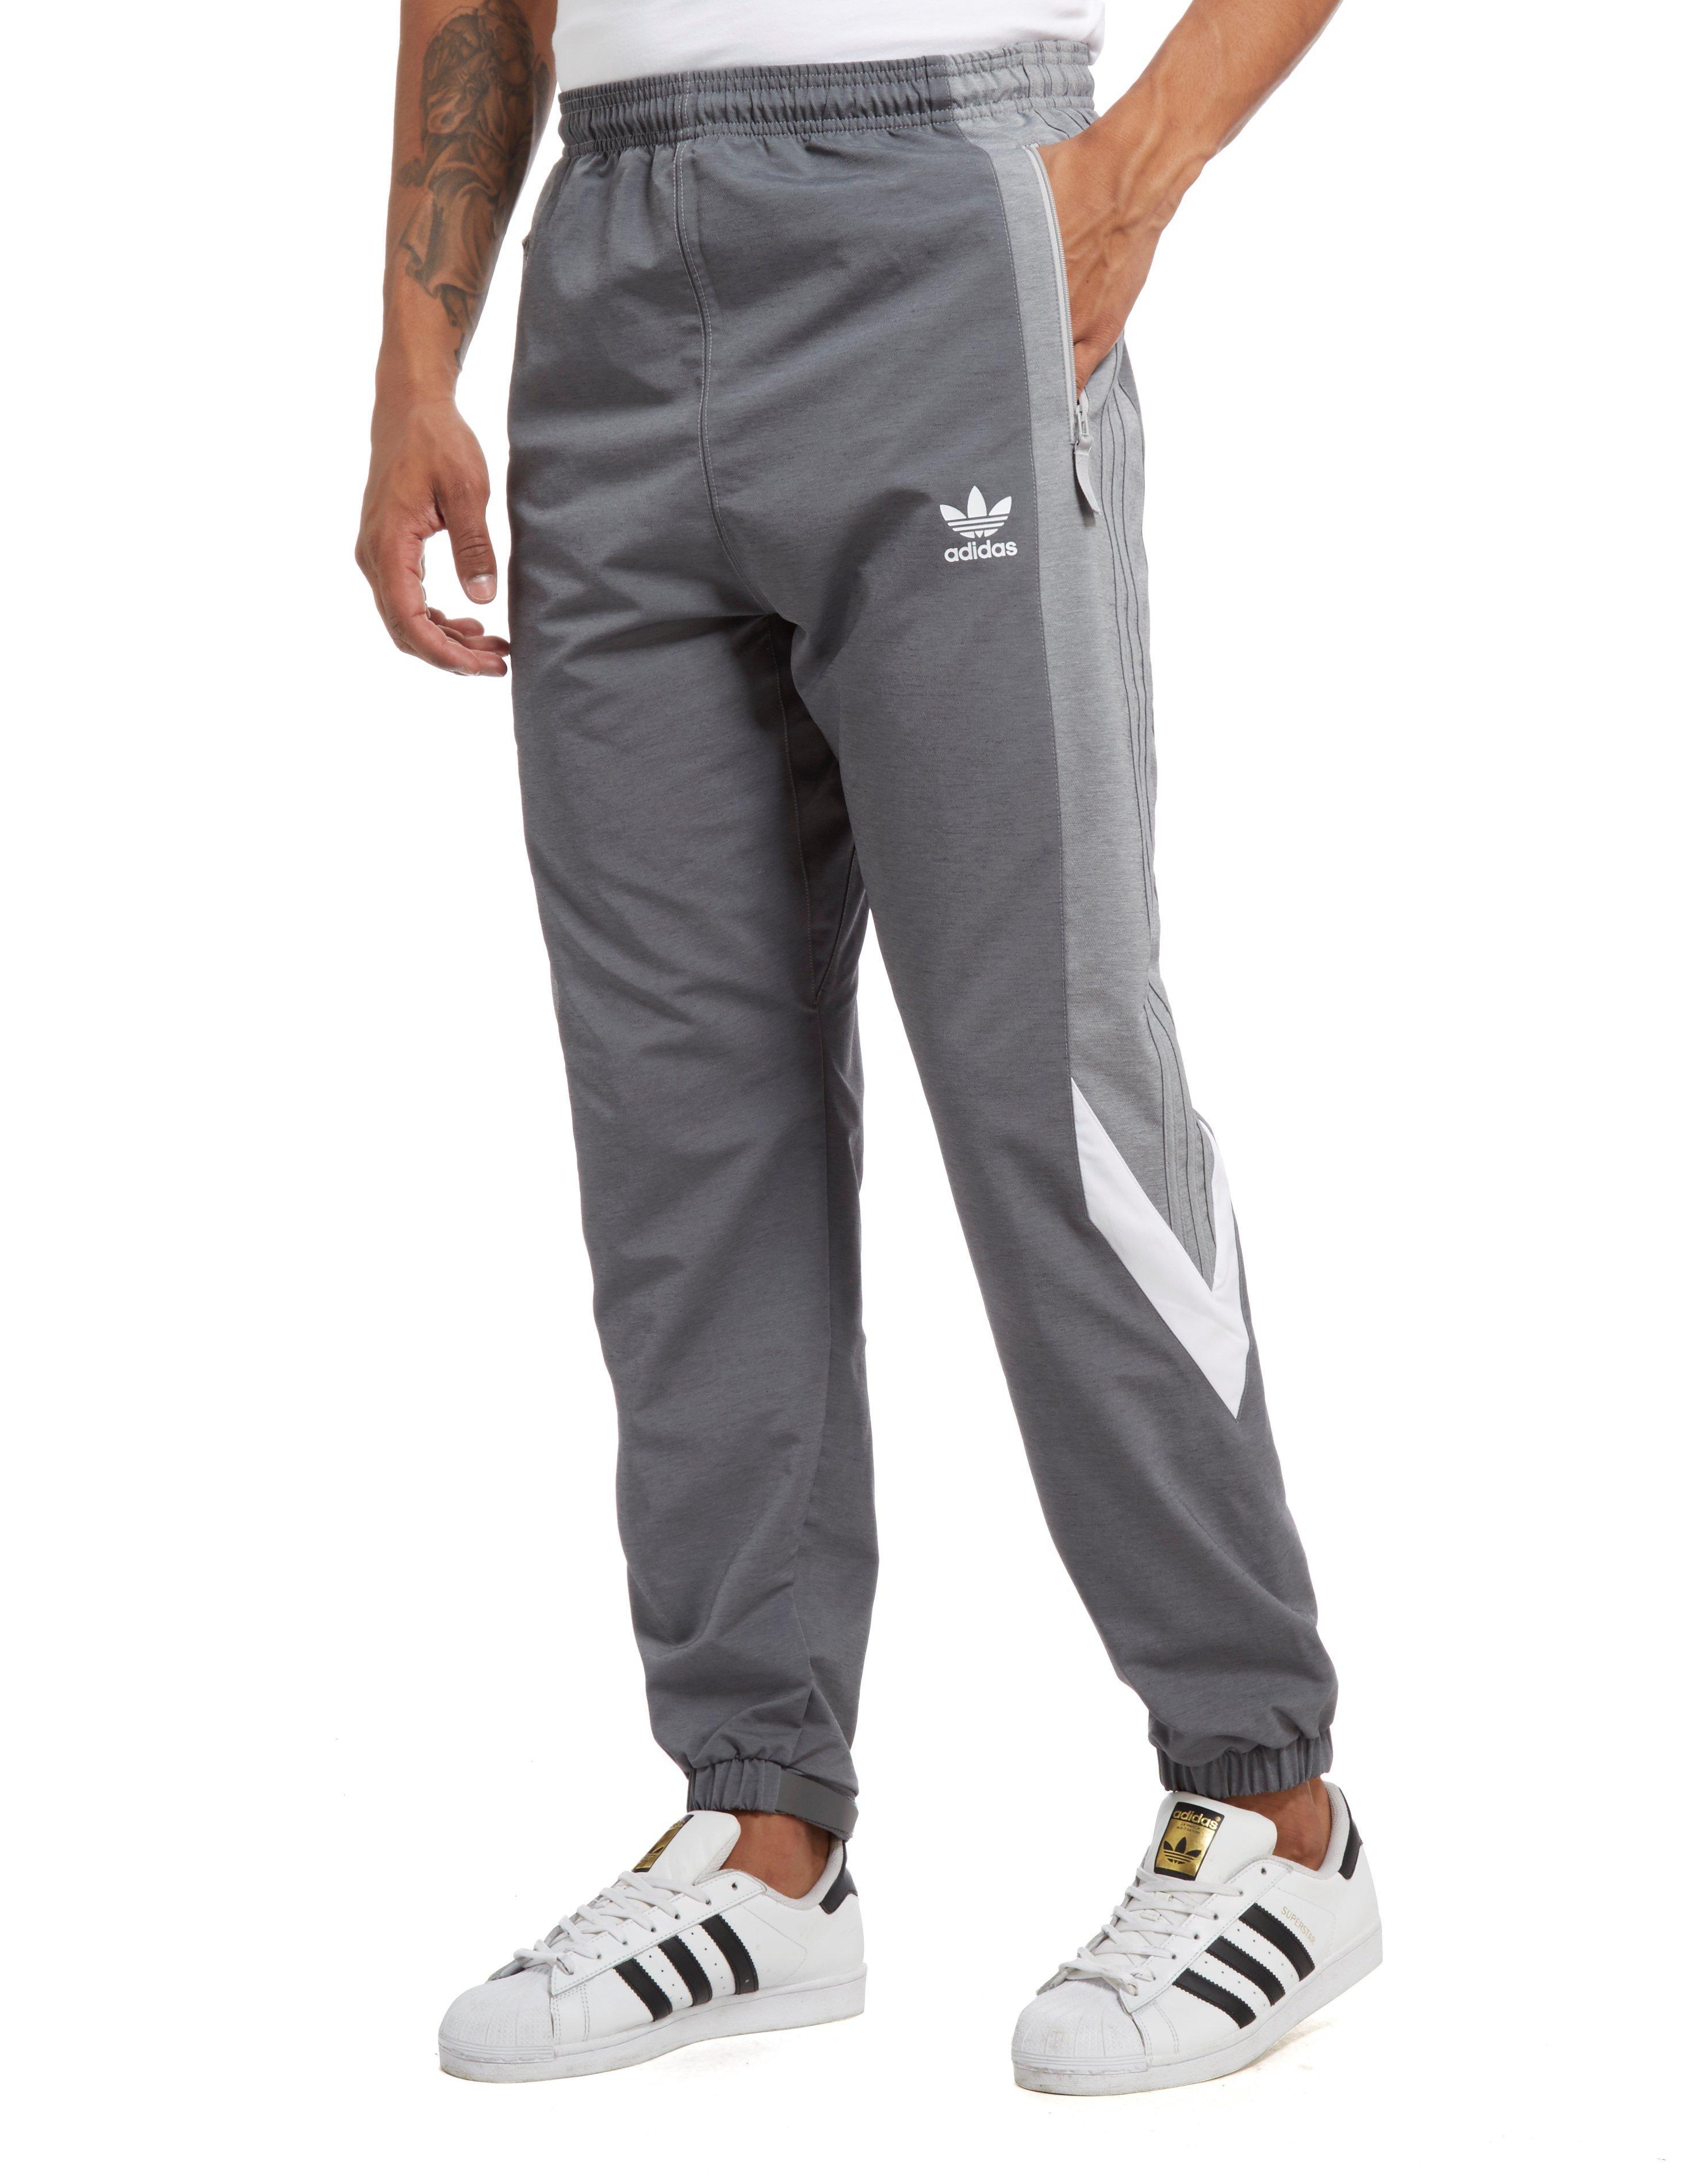 adidas Originals Synthetic Nova Woven Pants in Grey (Gray) for Men - Lyst